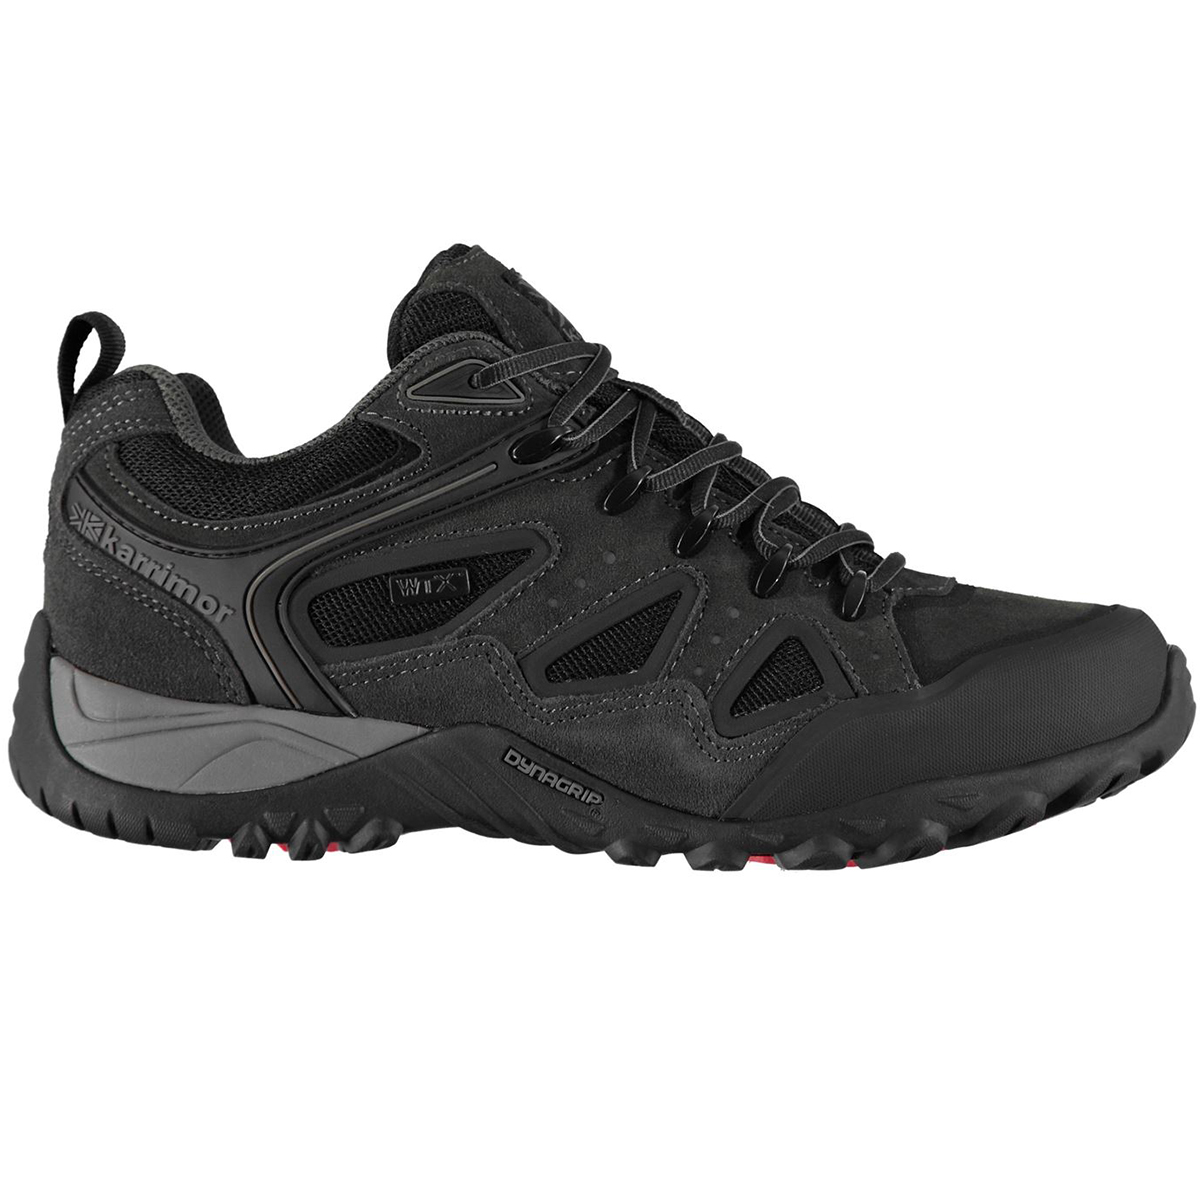 Karrimor Men's Ridge Wtx Waterproof Low Hiking Shoes - Black, 12